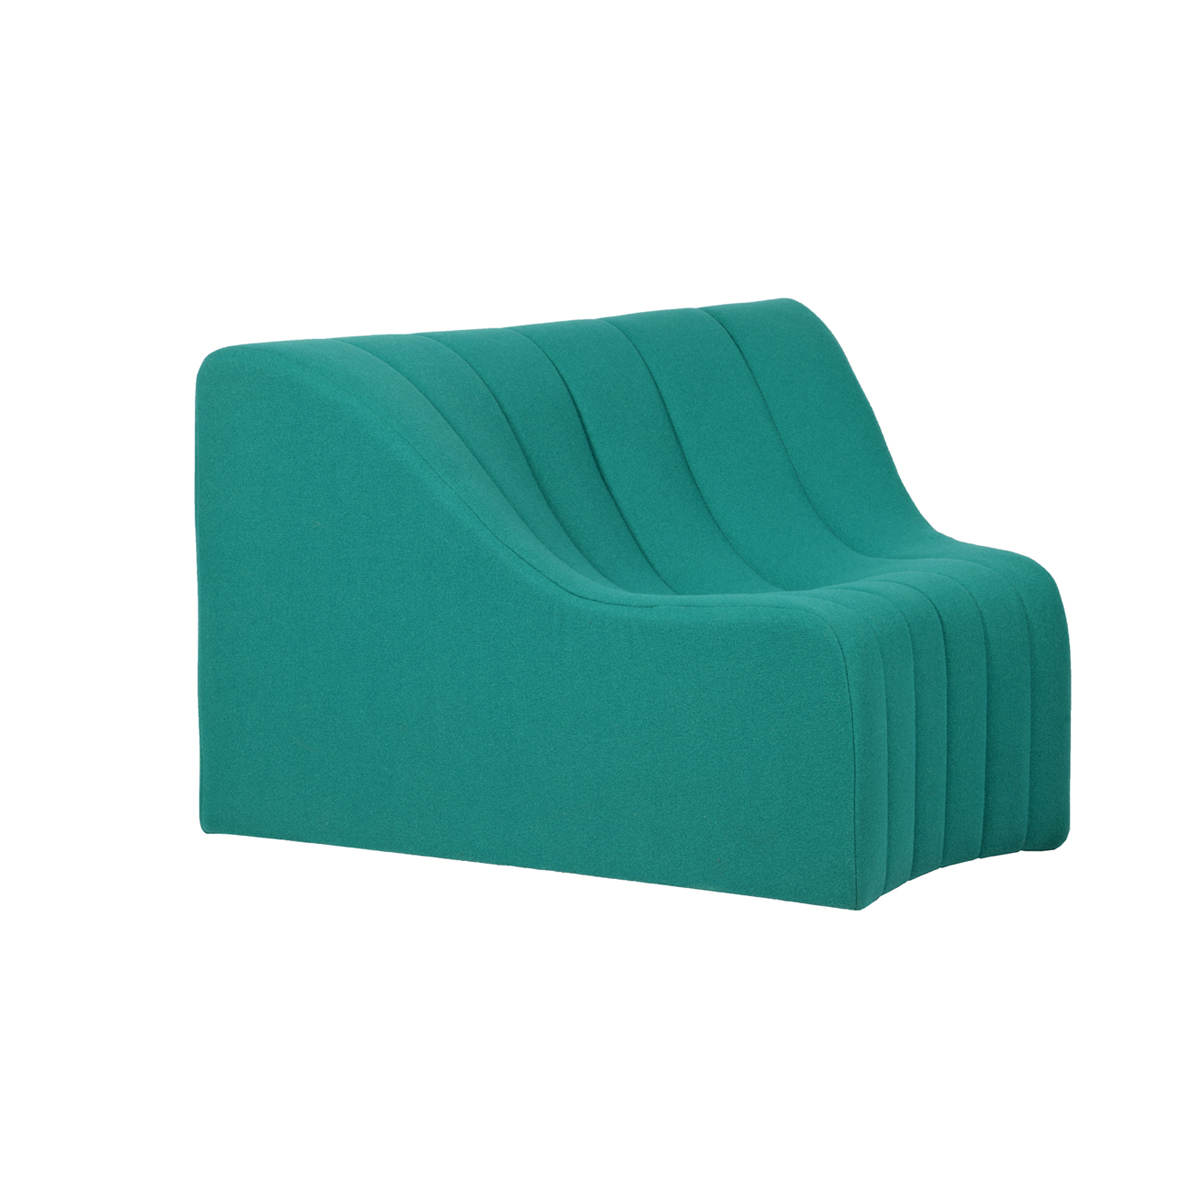 Chromatique Low Armless Chair Emerald Green Lg